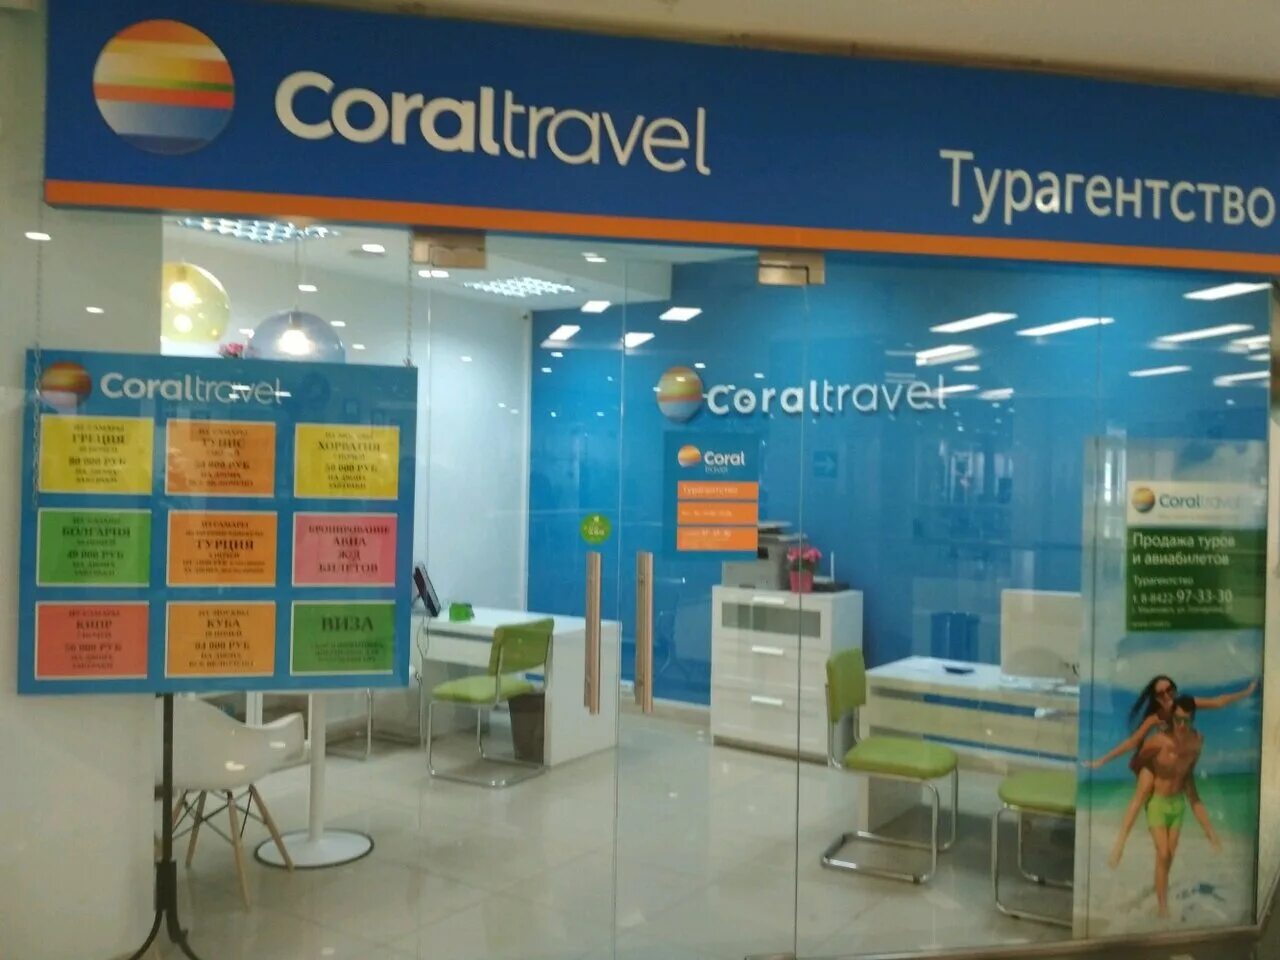 1 coral travel. Coral Travel турагентство. Coral Travel офис. Coral Travel турагентство офис. Корал Тревел Ульяновск.